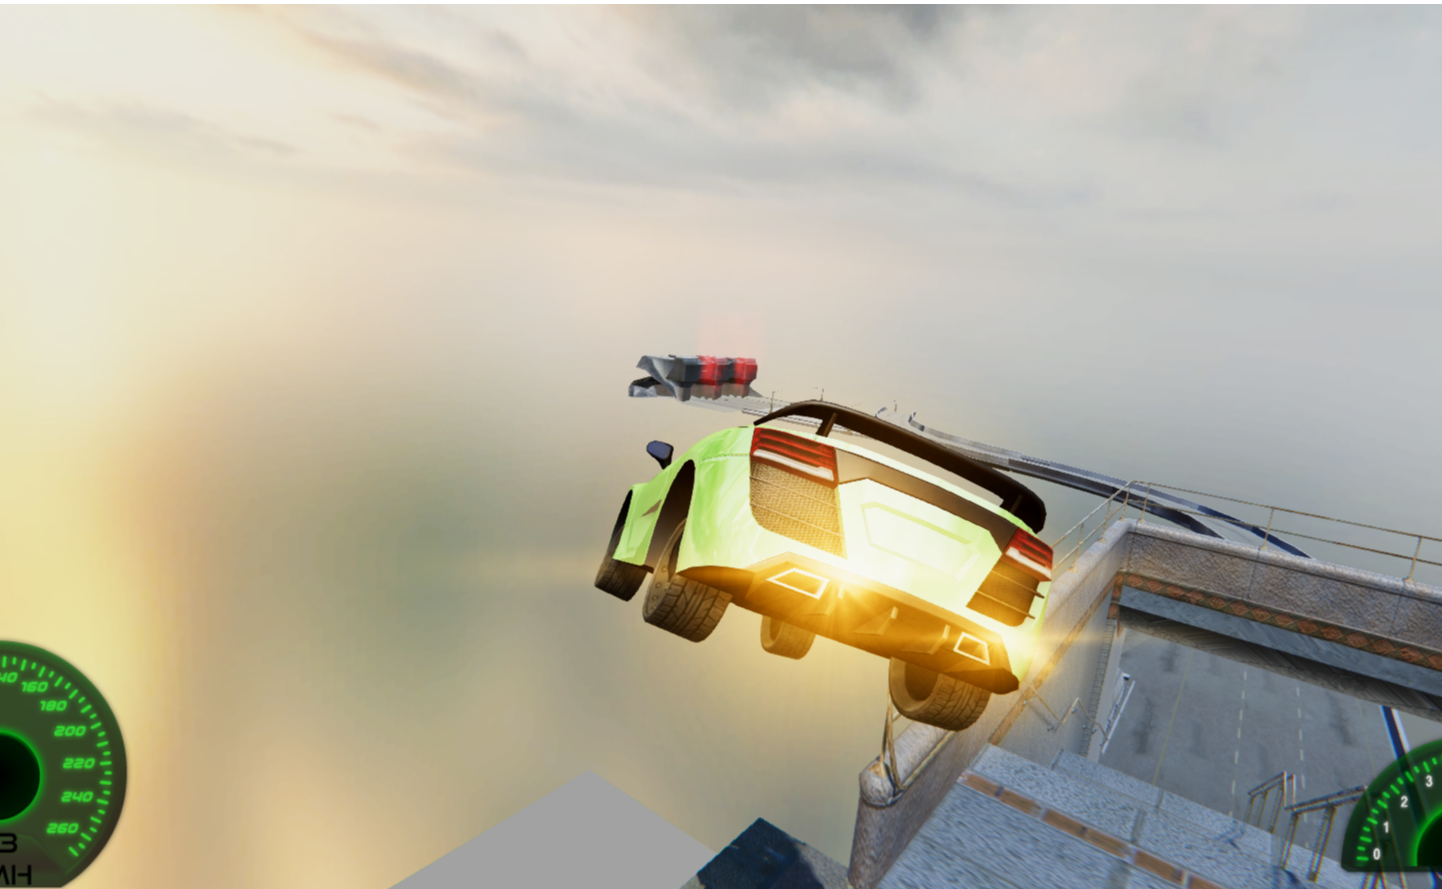 Grand Stunt Auto 2